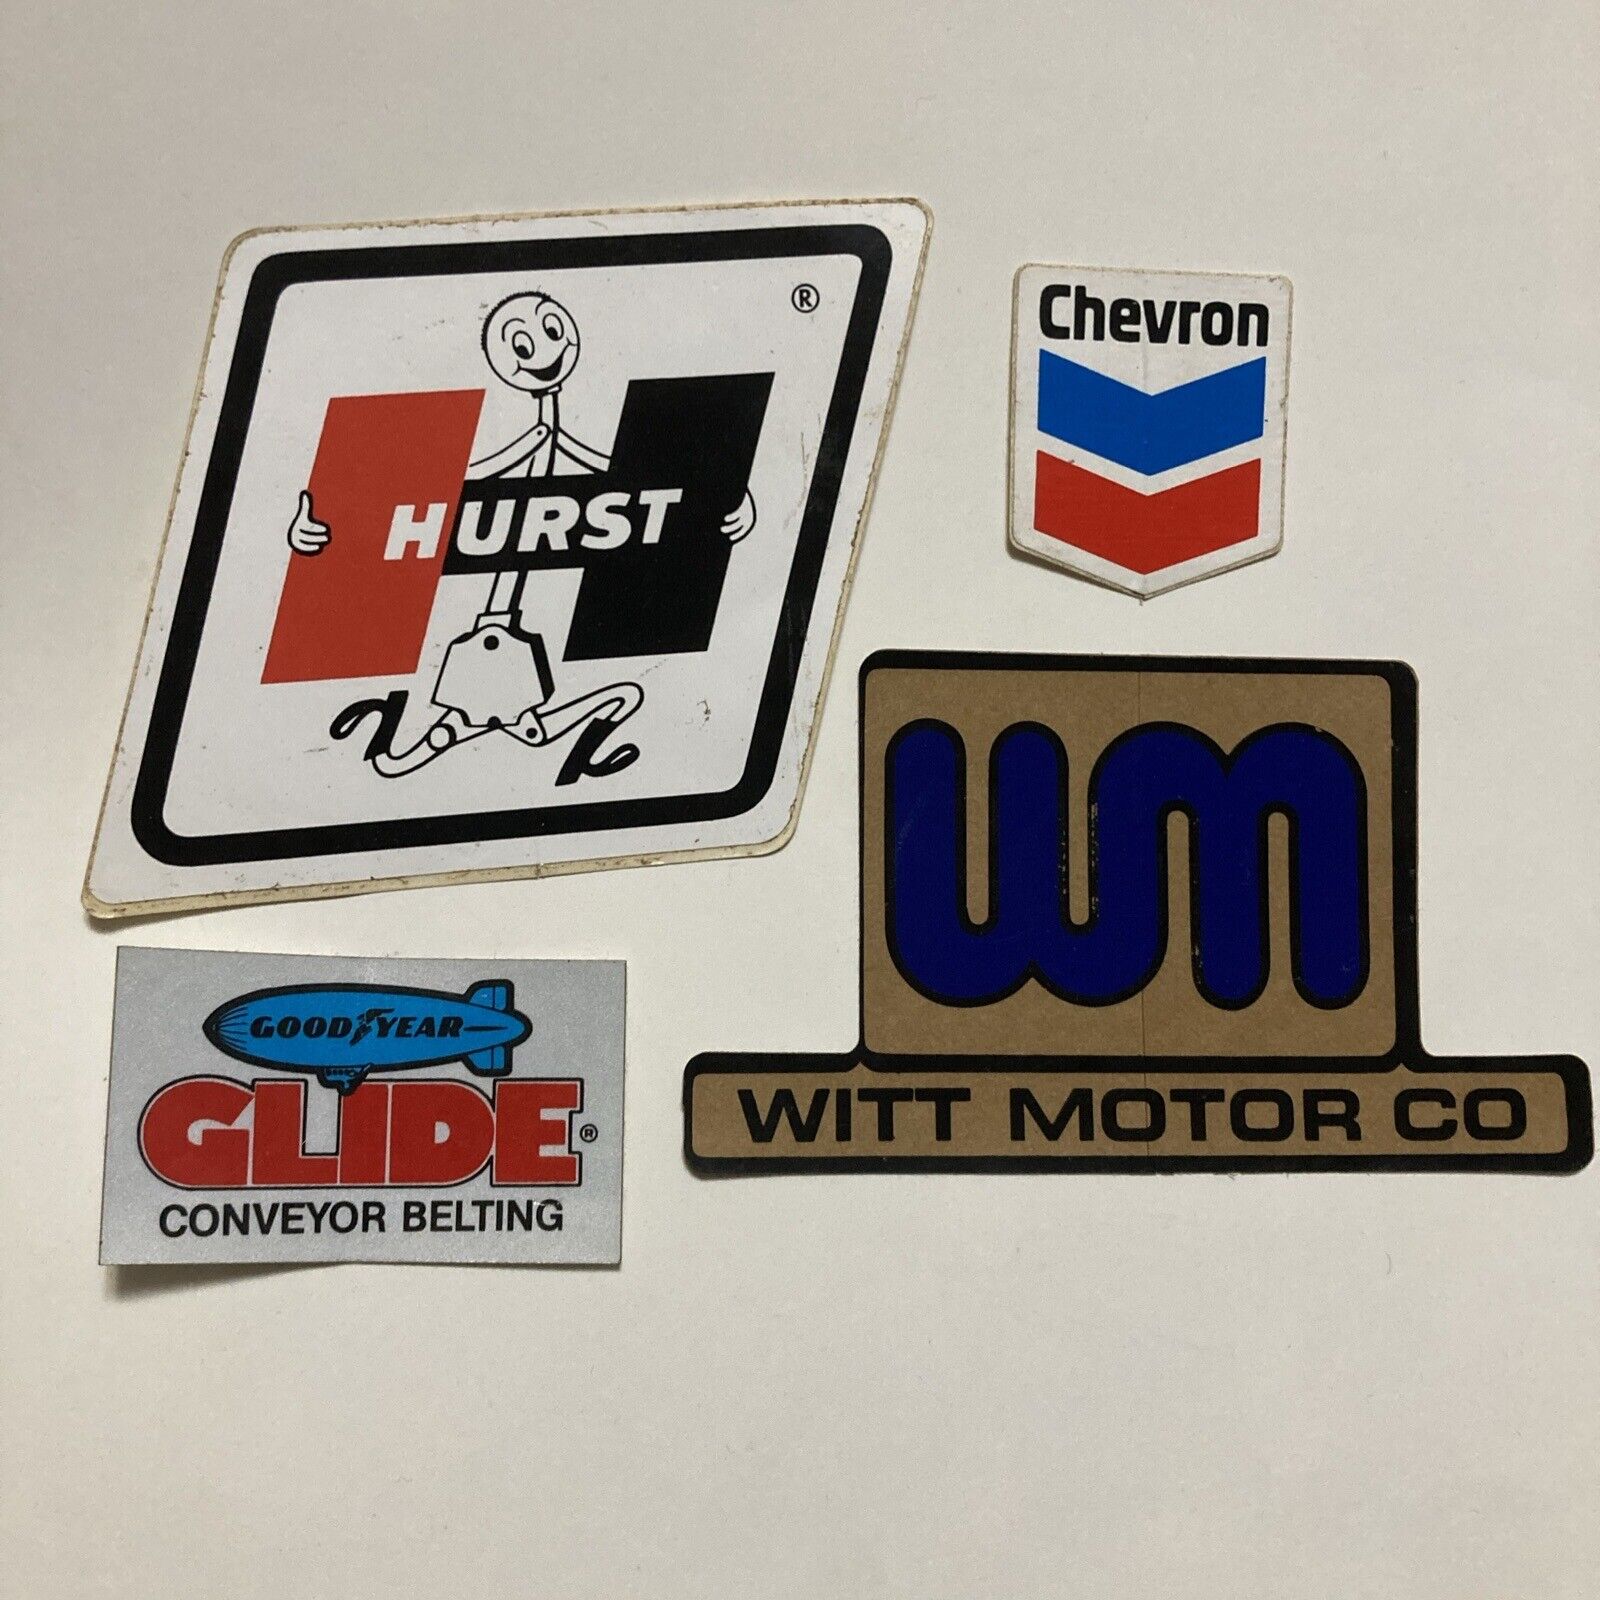 4- Goodyear Hurst Chevron Witt Motor Co. Vintage Original Decal /Stickers 1980’s